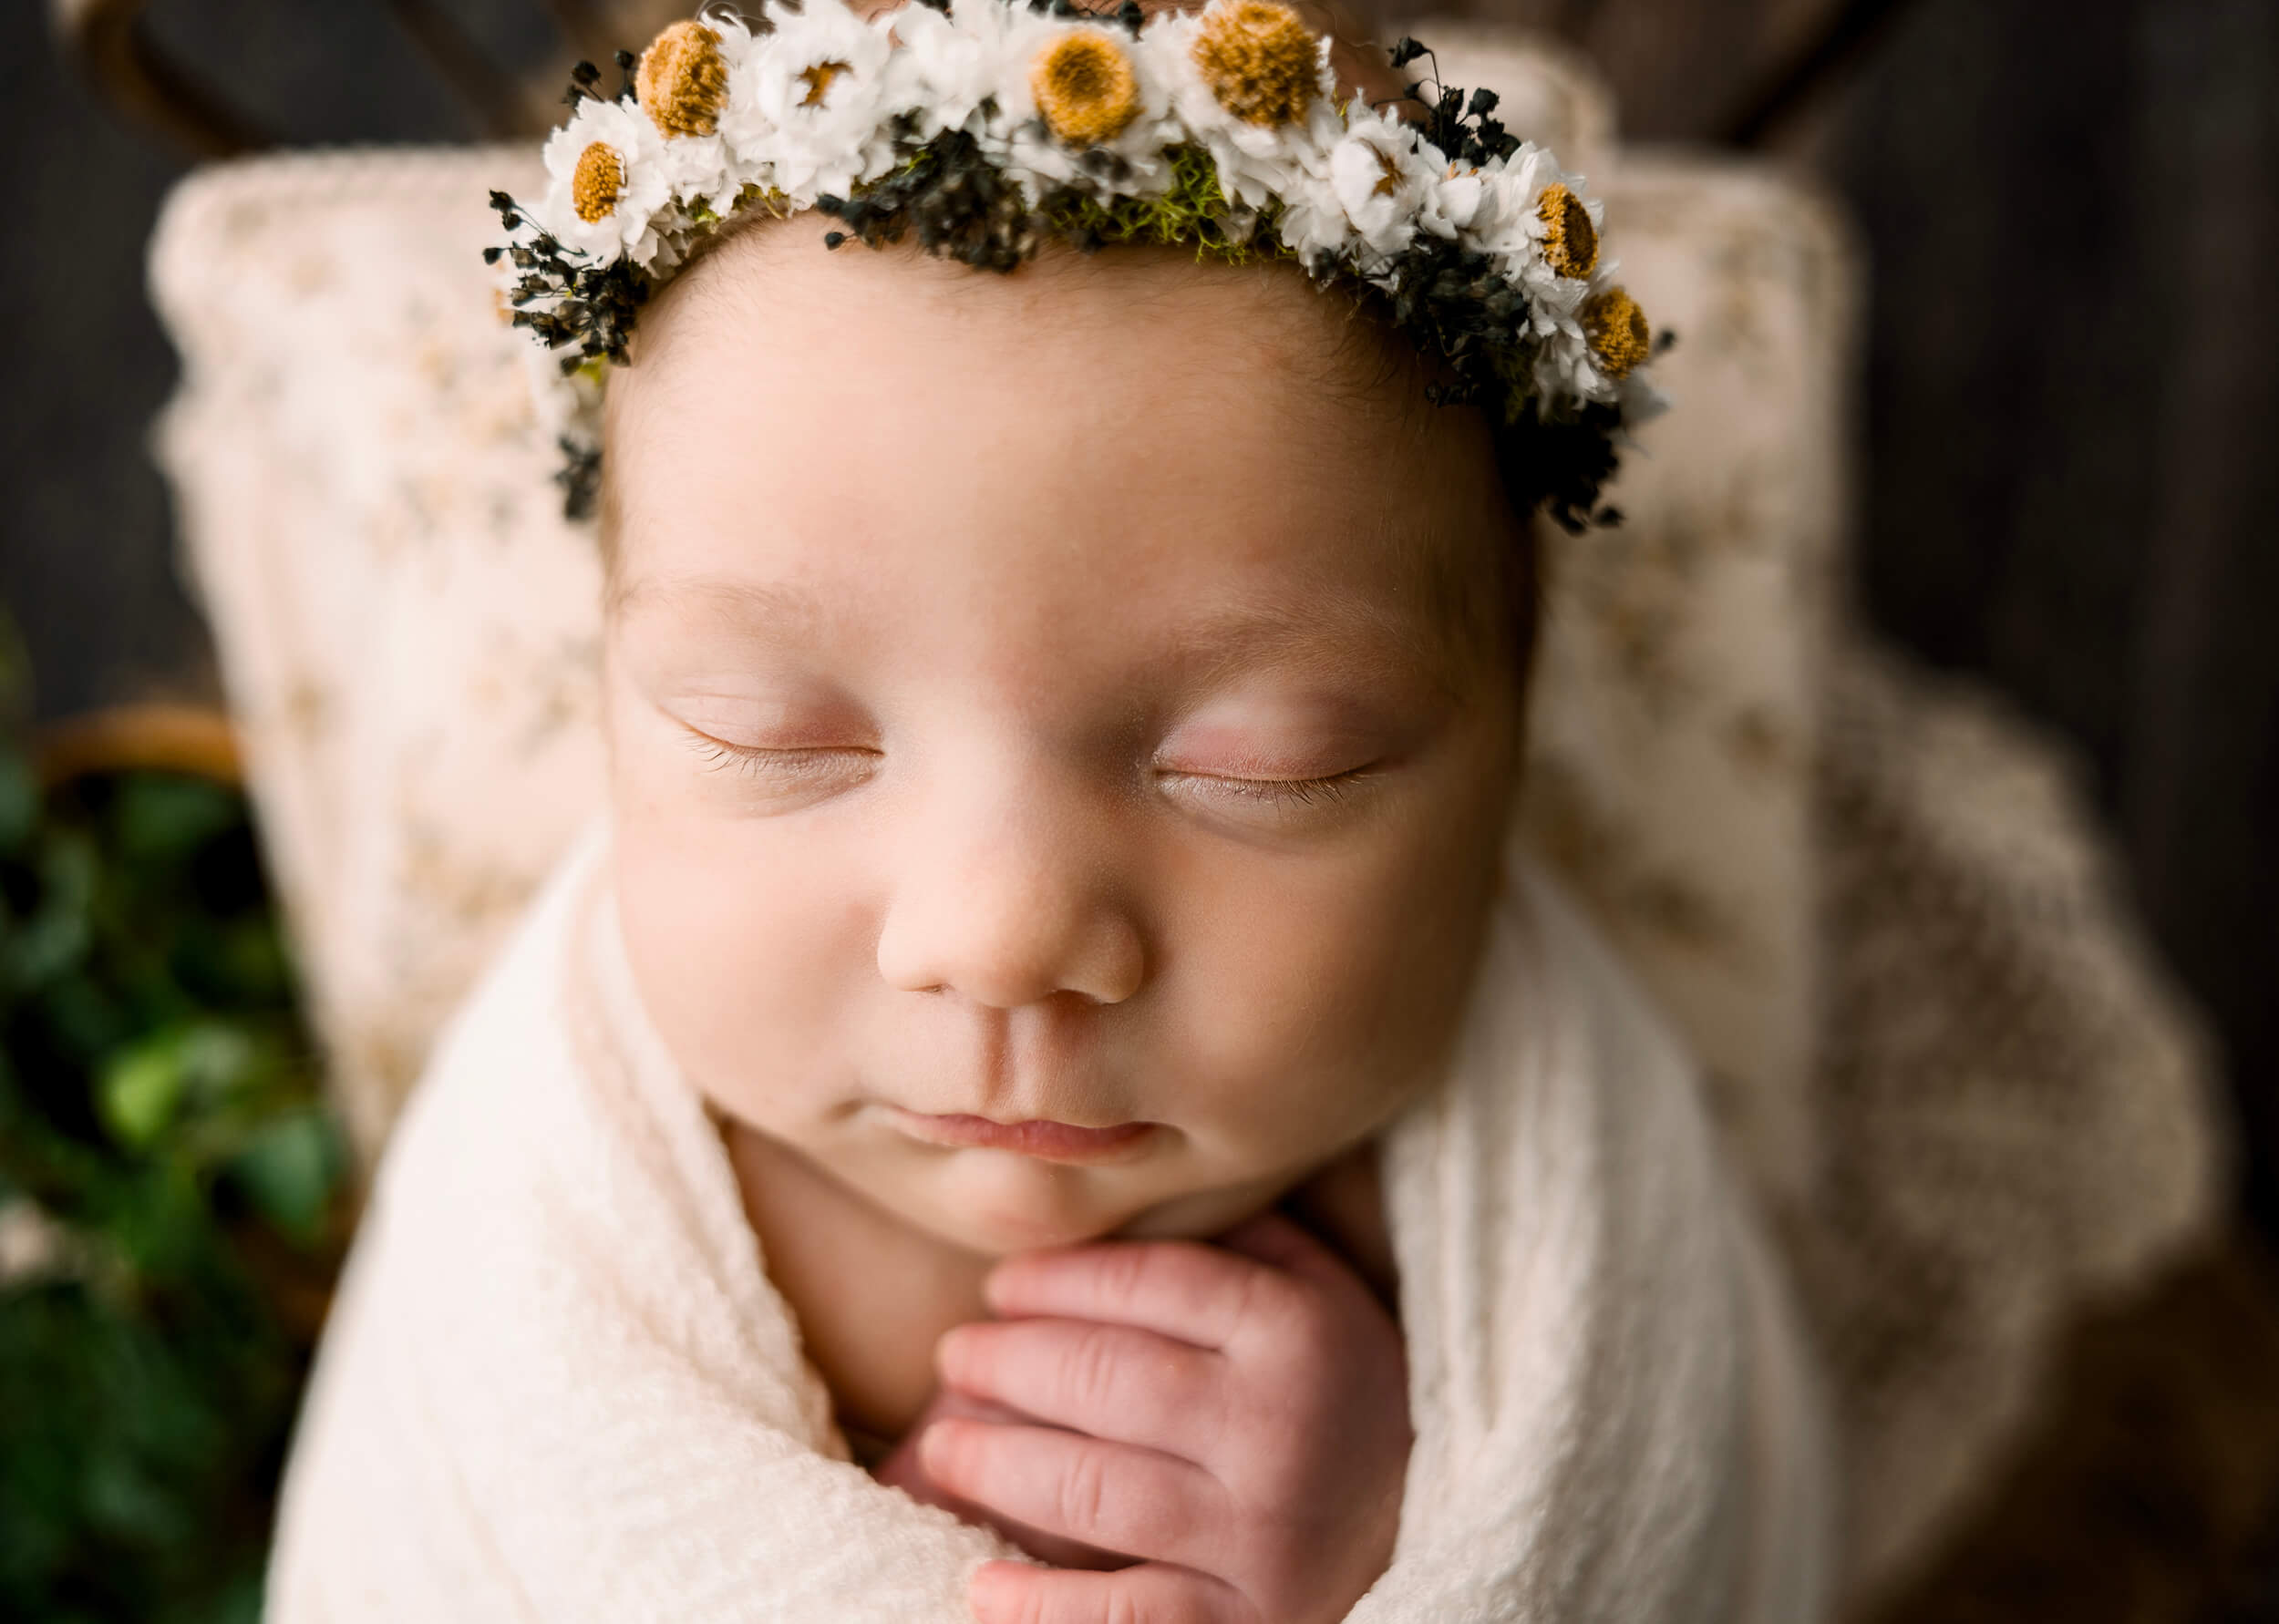 Newborn baby girl with a sunflower headband